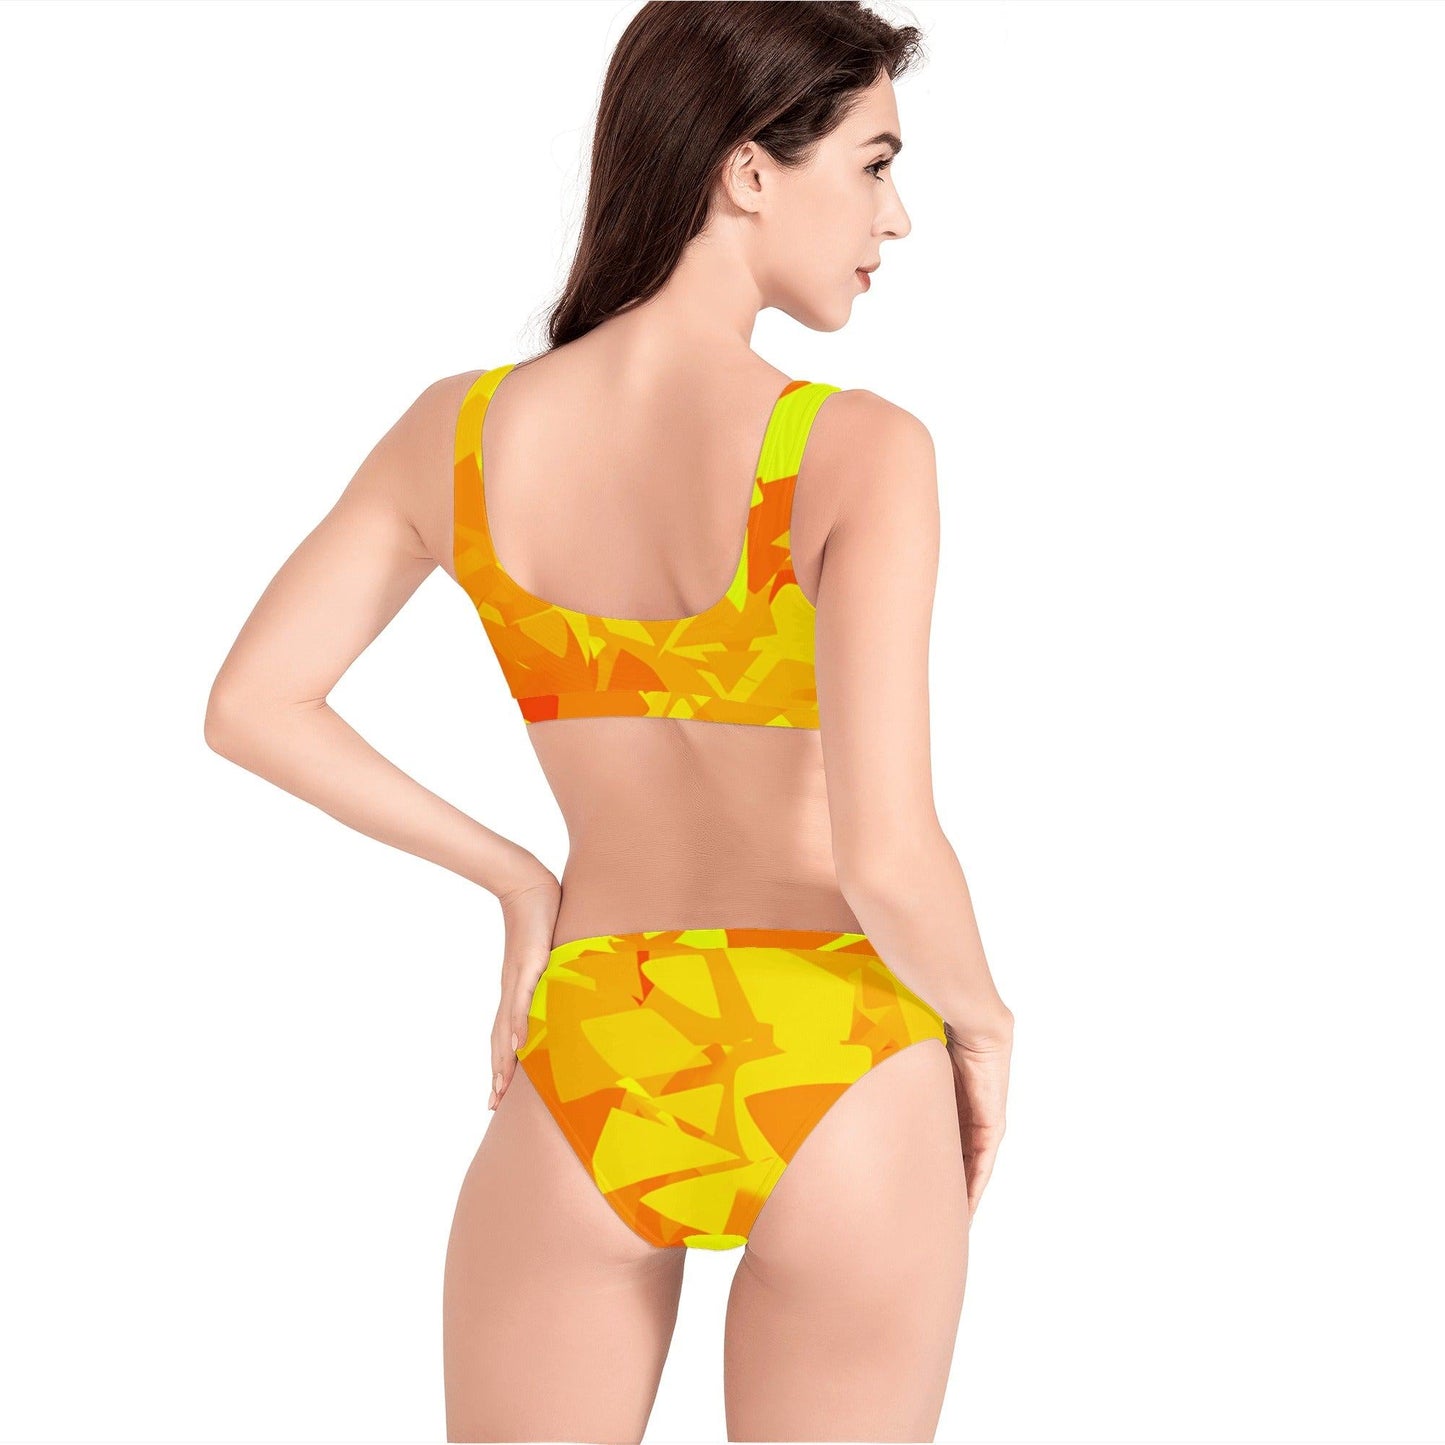 Yellow Crystal Sport Bikini Sport Bikini 54.99 Bikini, Crystal, Sport, yellow JLR Design